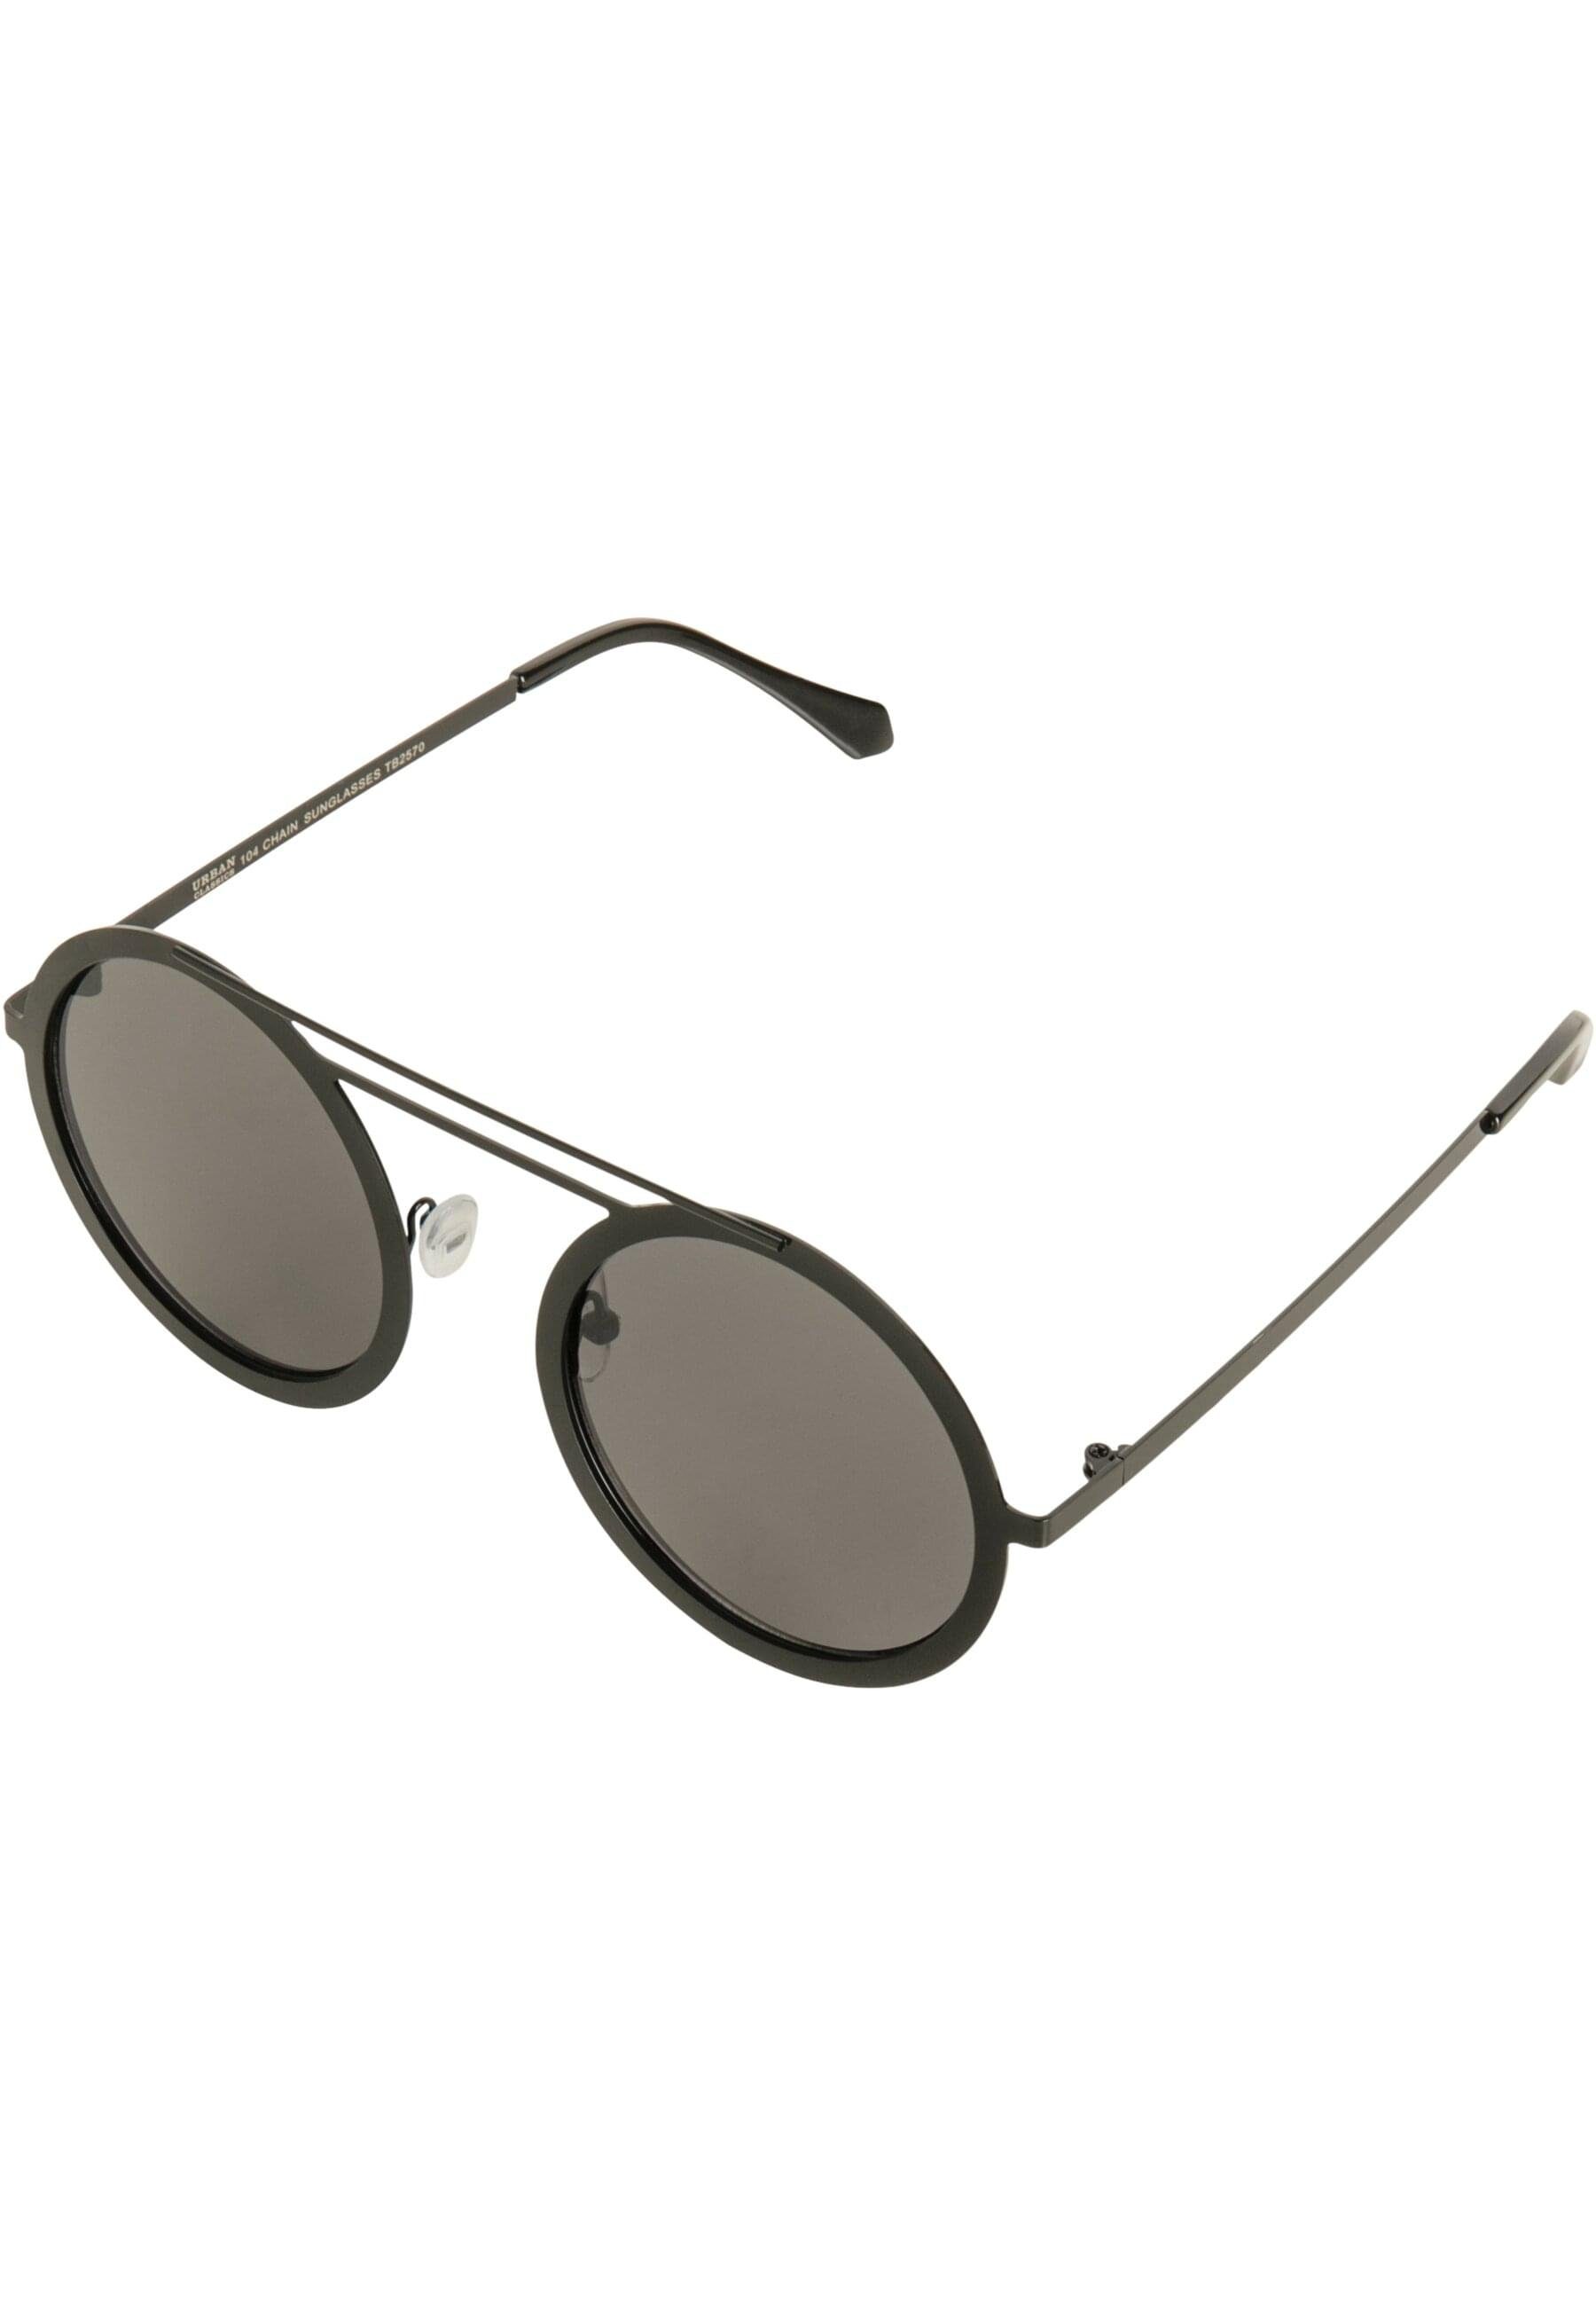 Sunglasses Unisex CLASSICS Sonnenbrille URBAN 104 Chain black/black